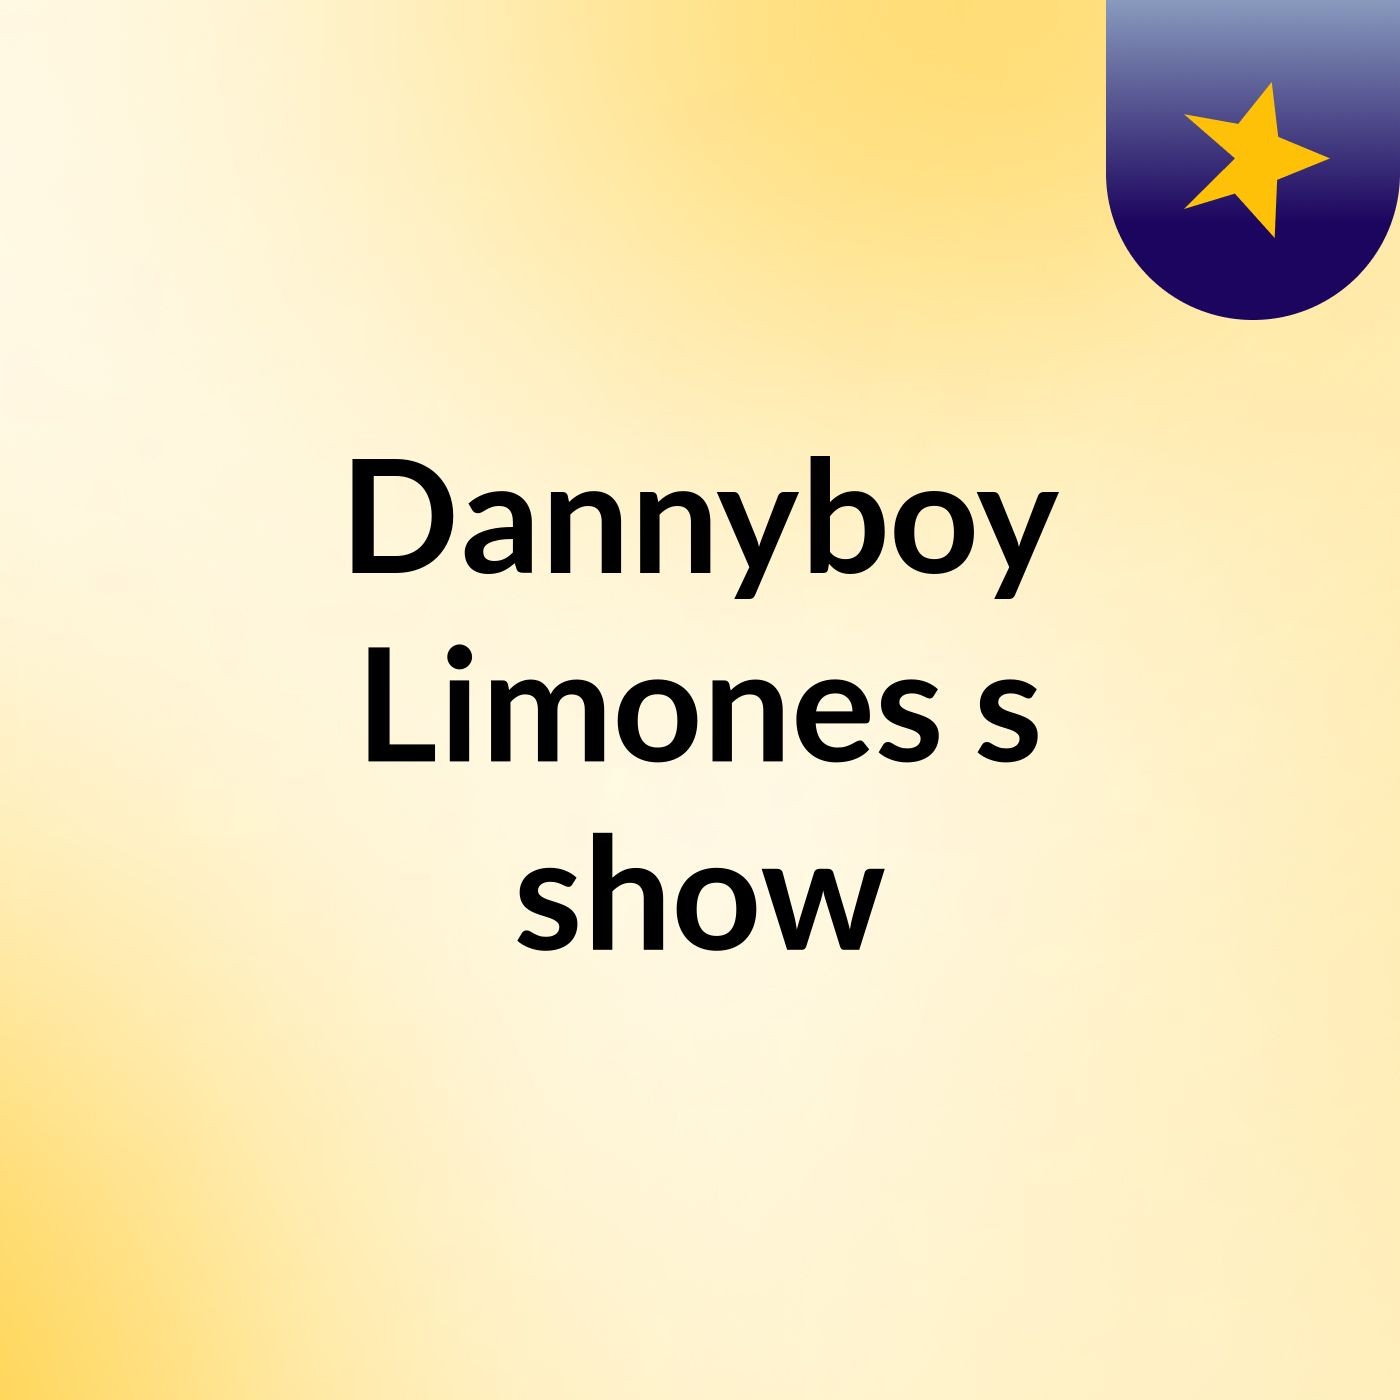 Episode 6 - Dannyboy Limones's show